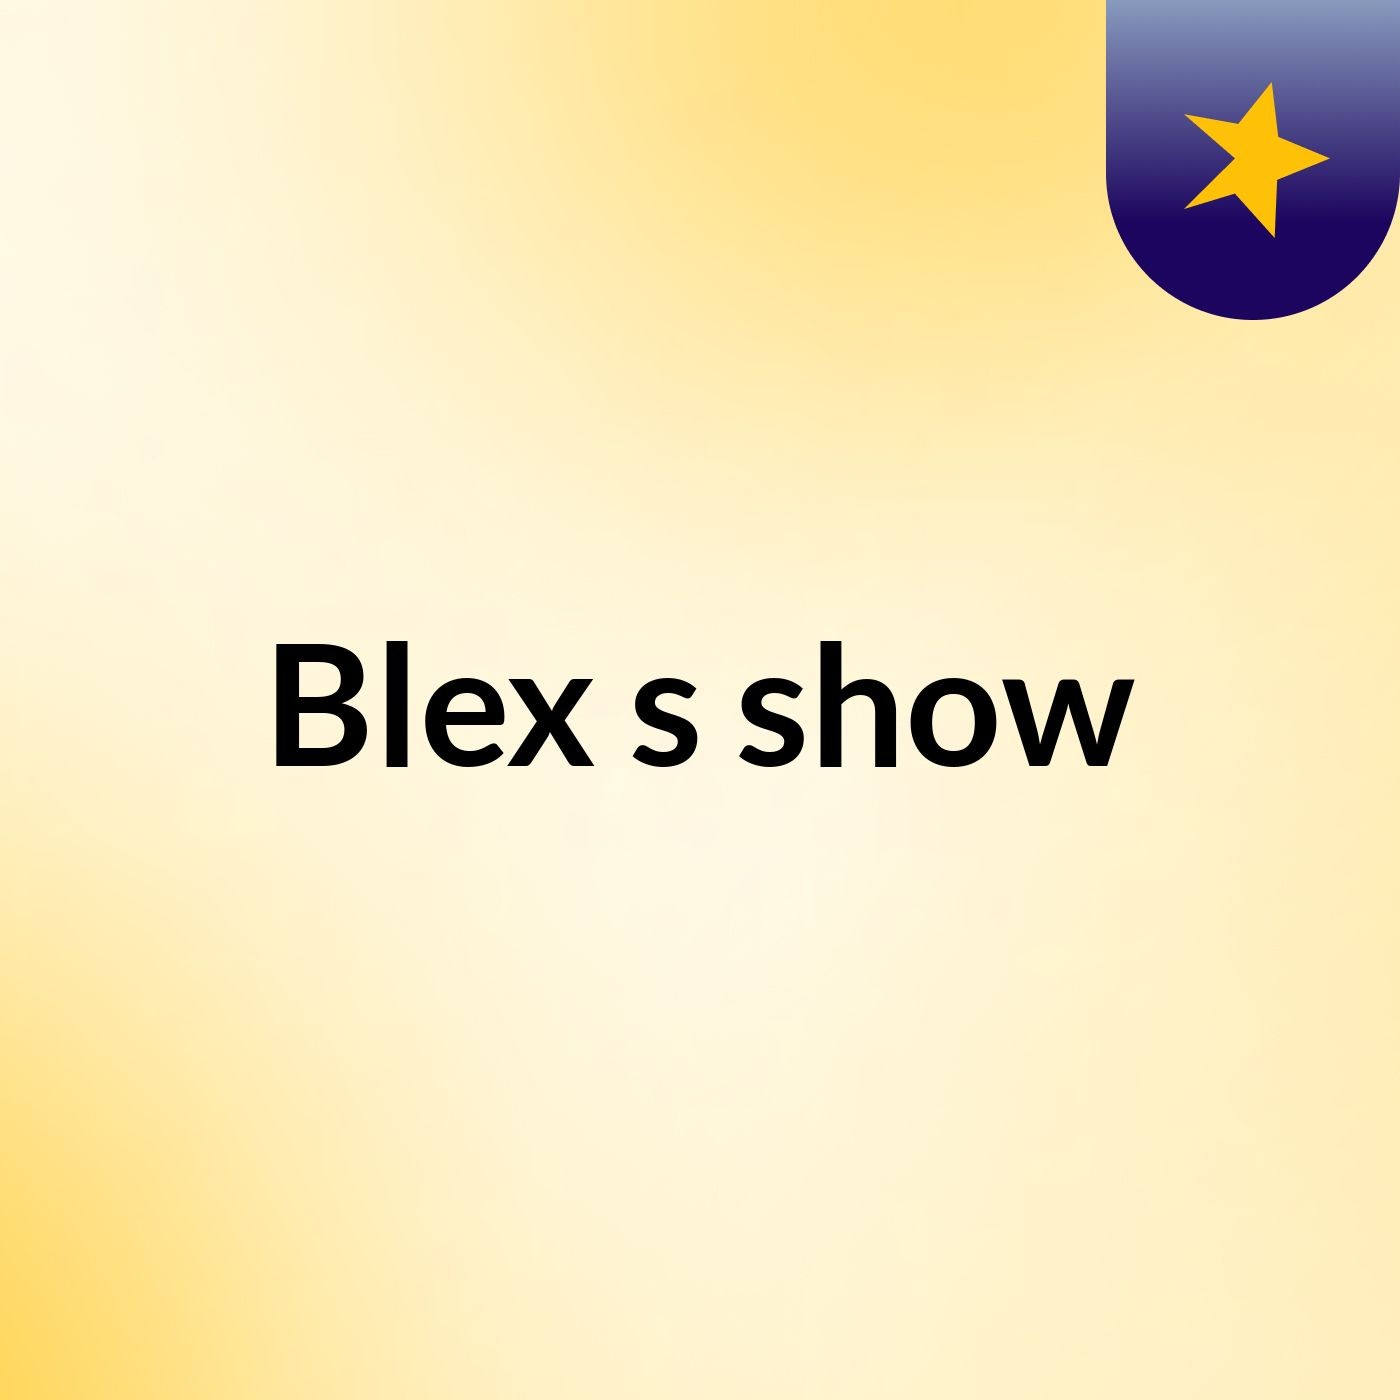 Blex's show